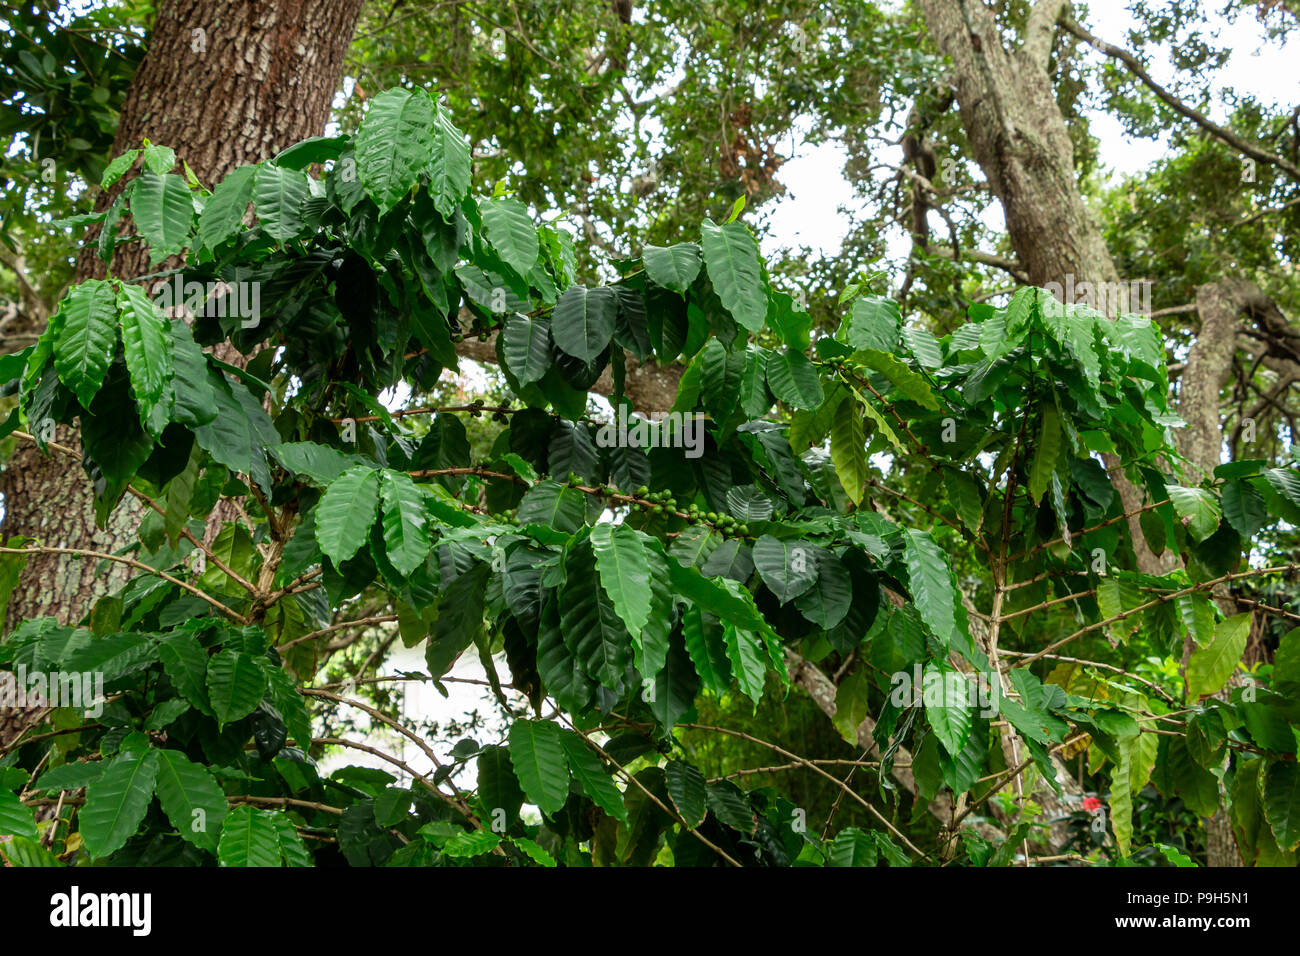 Arabian coffee plant (Coffea arabica), with green beans - Davie, Florida, USA Stock Photo